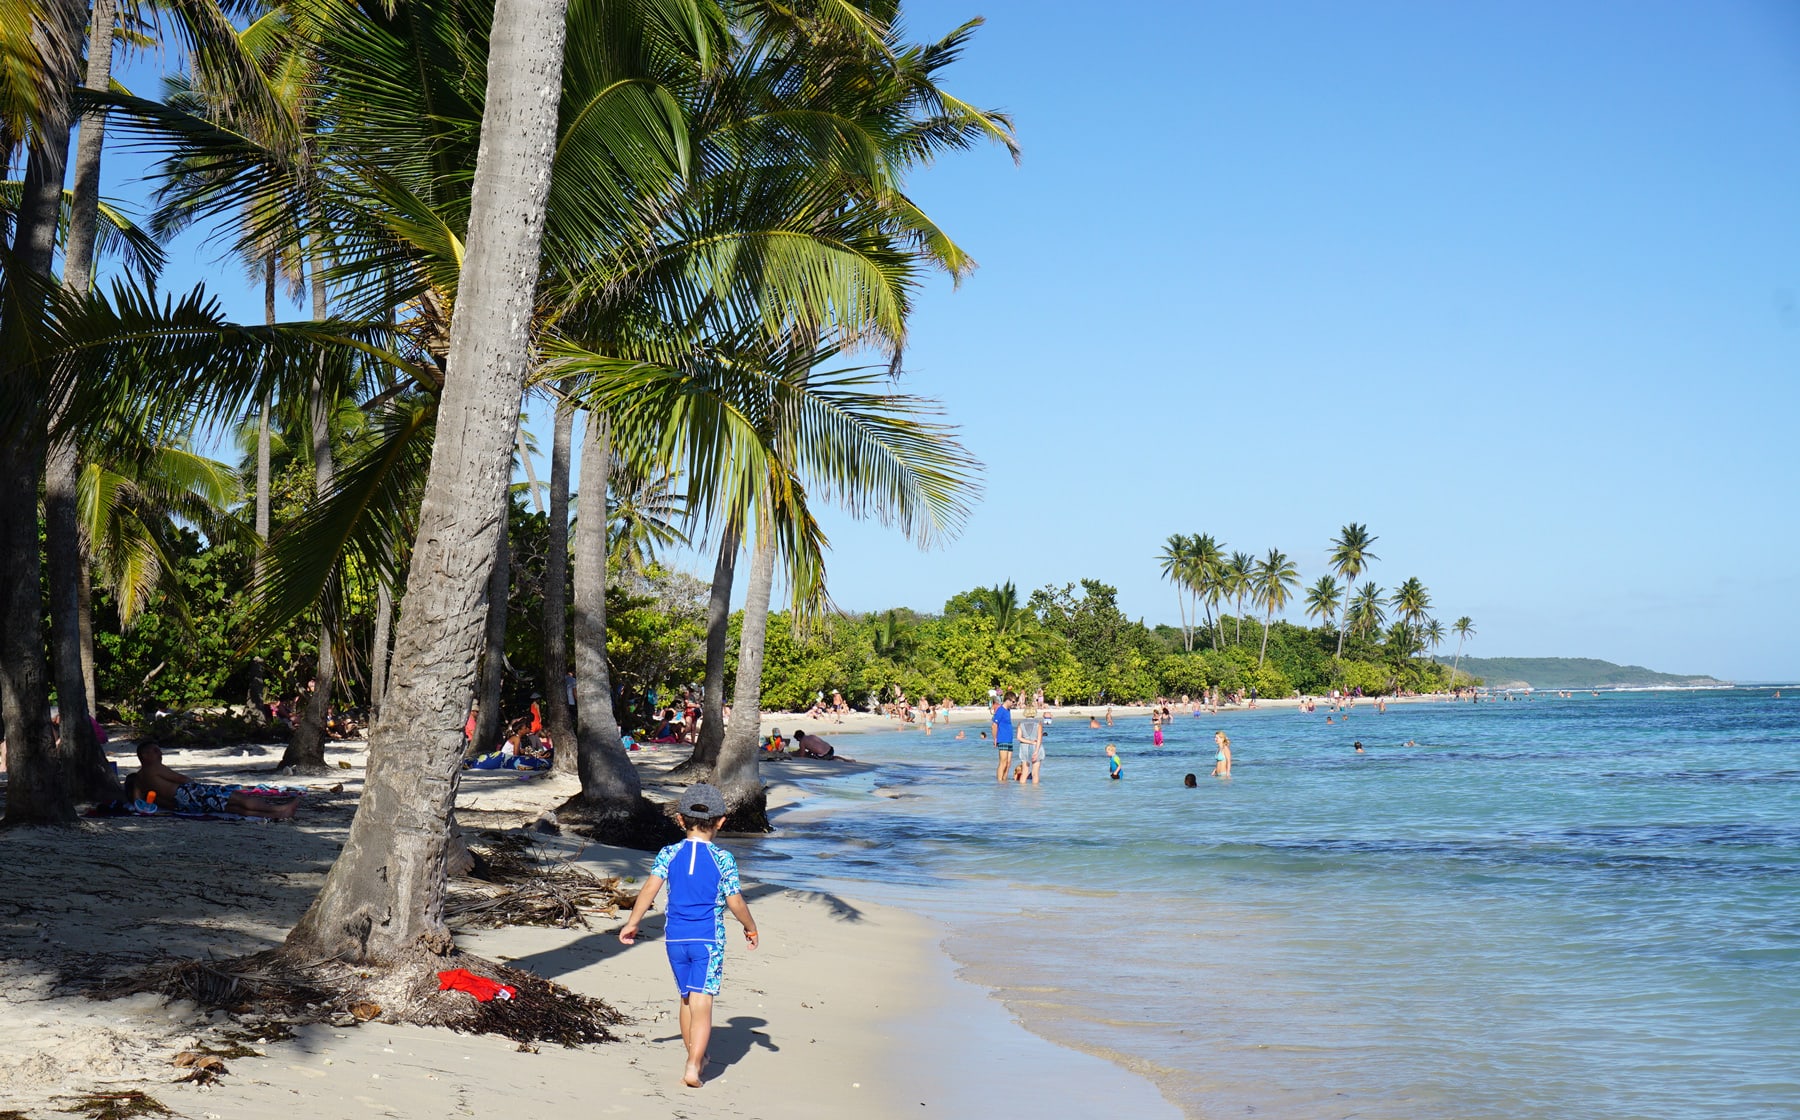 Voyage en famille en Guadeloupe : la plage de bois Jolan